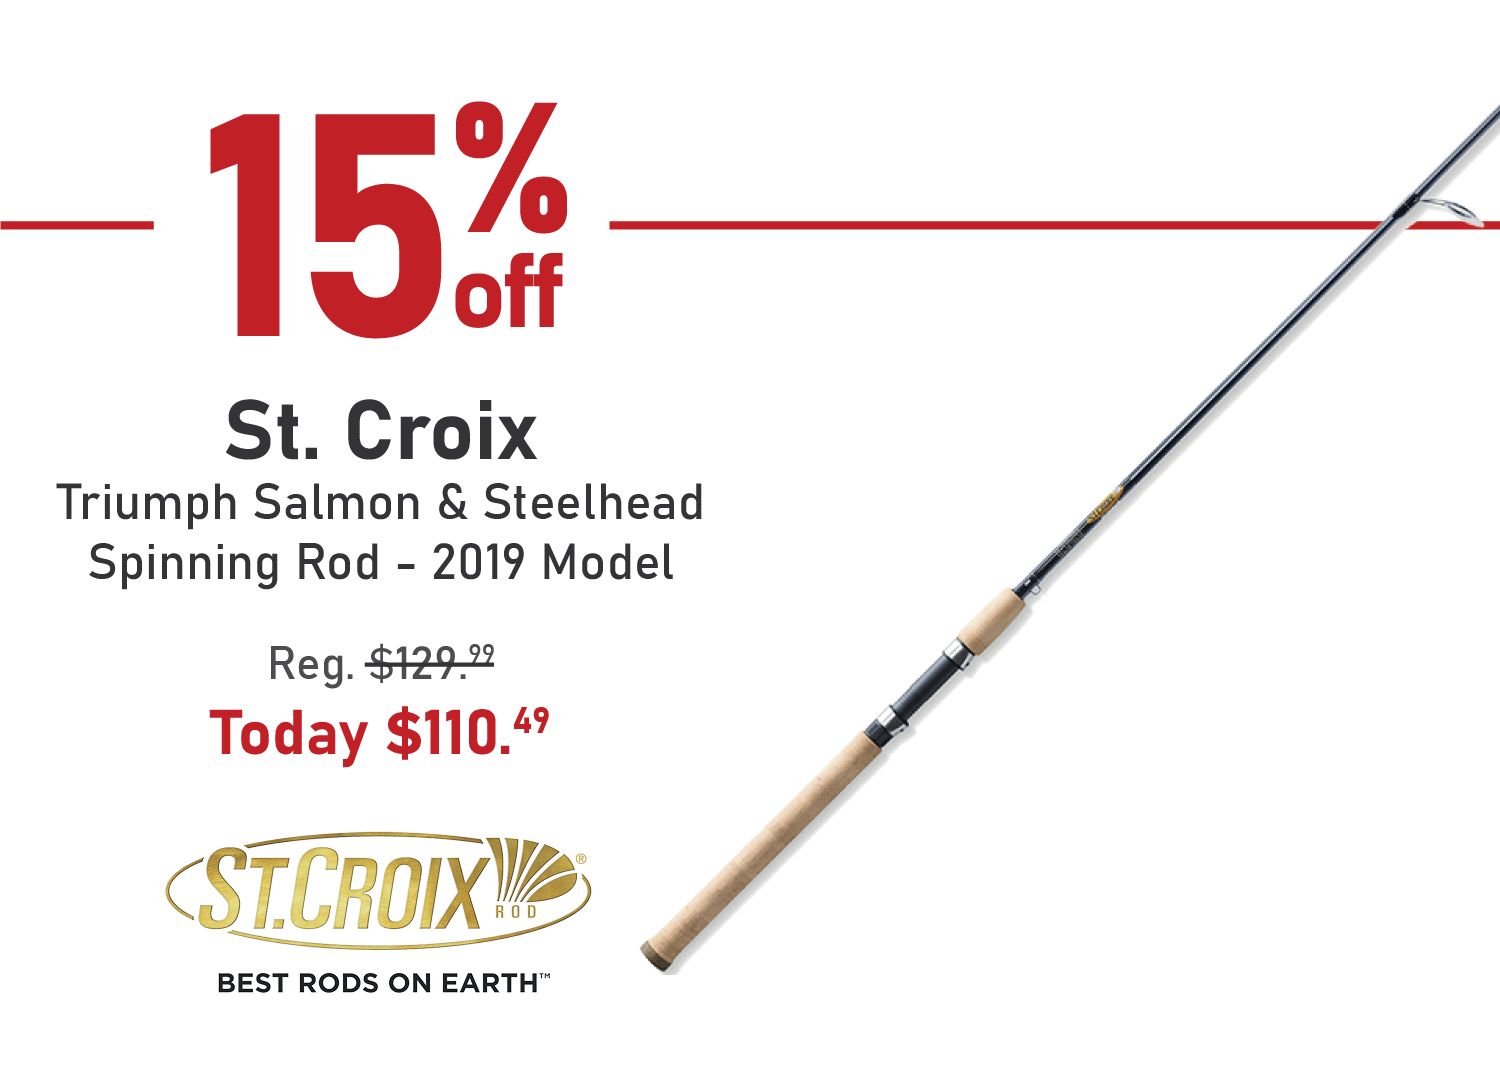 Save 15% on the St. Croix Triumph Salmon & Steelhead Spinning Rod - 2019 Model